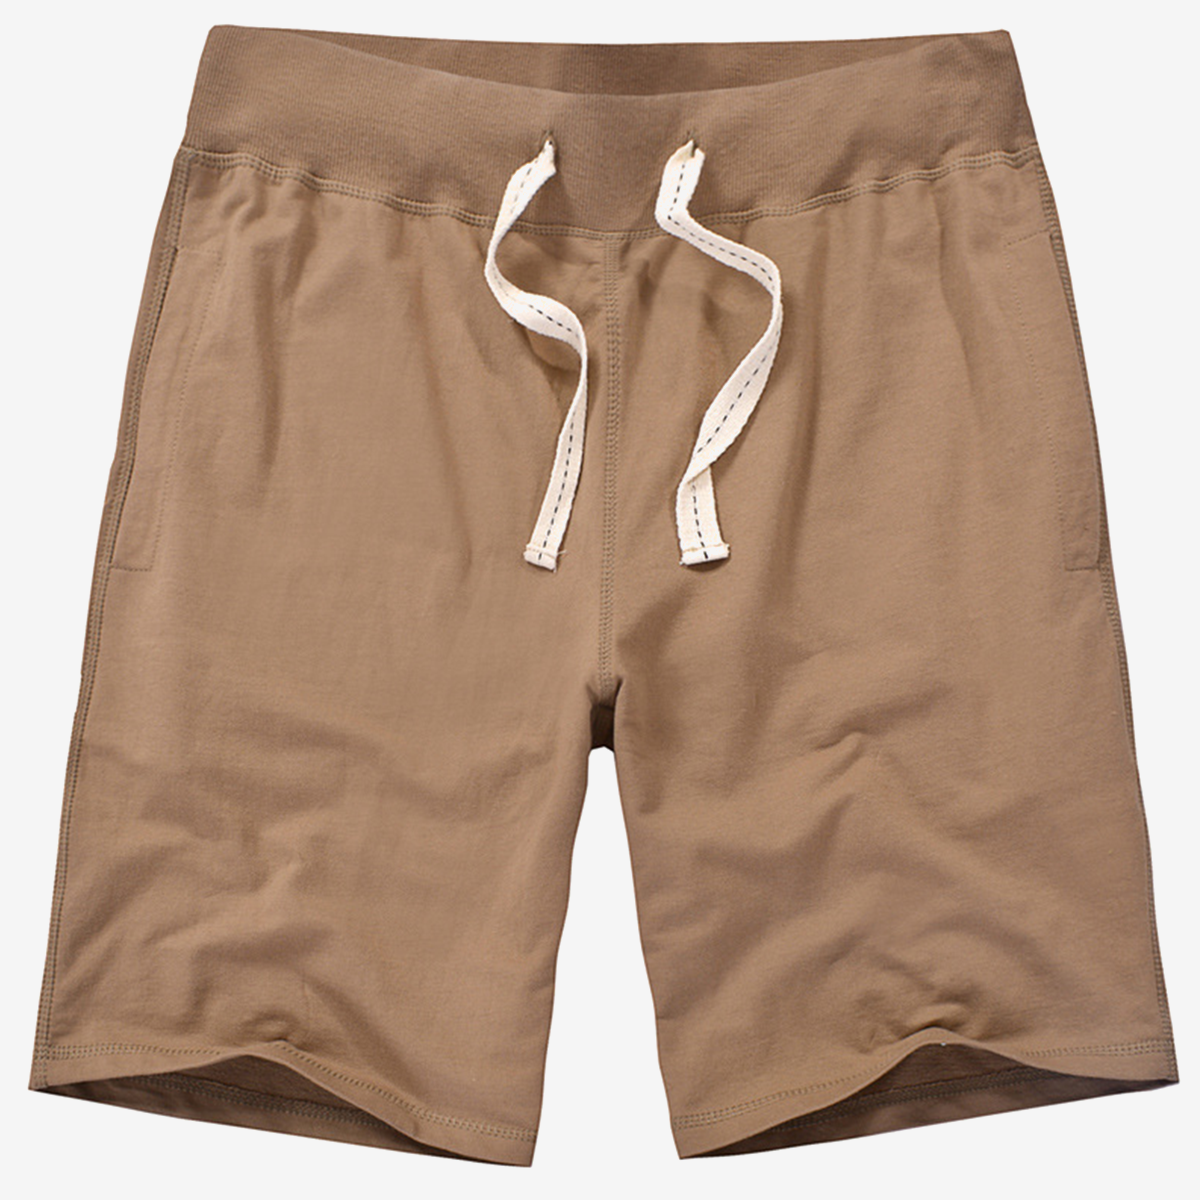 Men's Sweatpant Cotton Casual Summer Solid Color Breathable Sport Short